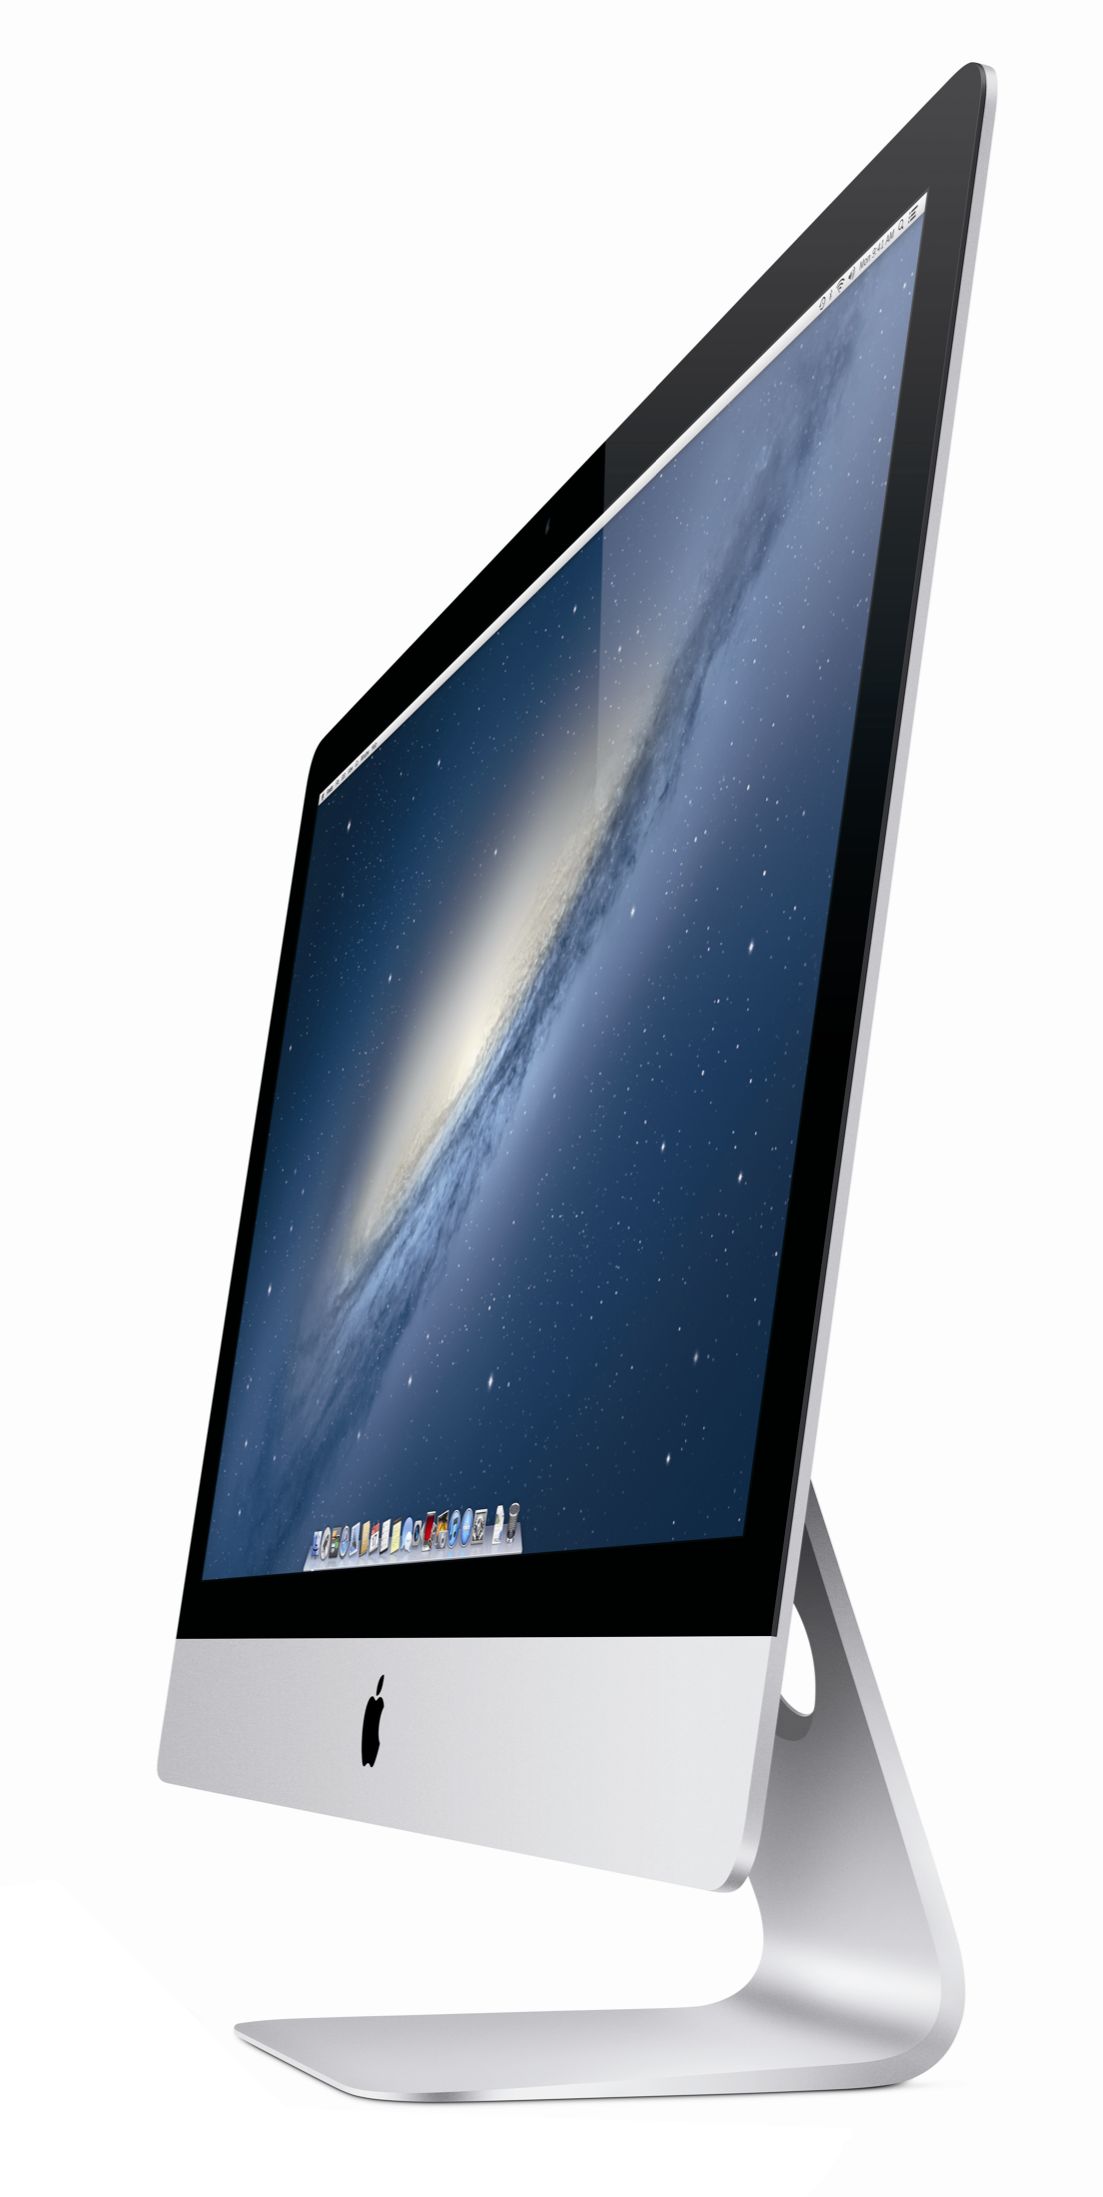 Restored Apple iMac 21.5" FHD All-in-One Computer, Intel Core i5, 8GB RAM, 1TB HD, Mac OS, Silver, ME086LL/A (Refurbished) - image 3 of 5